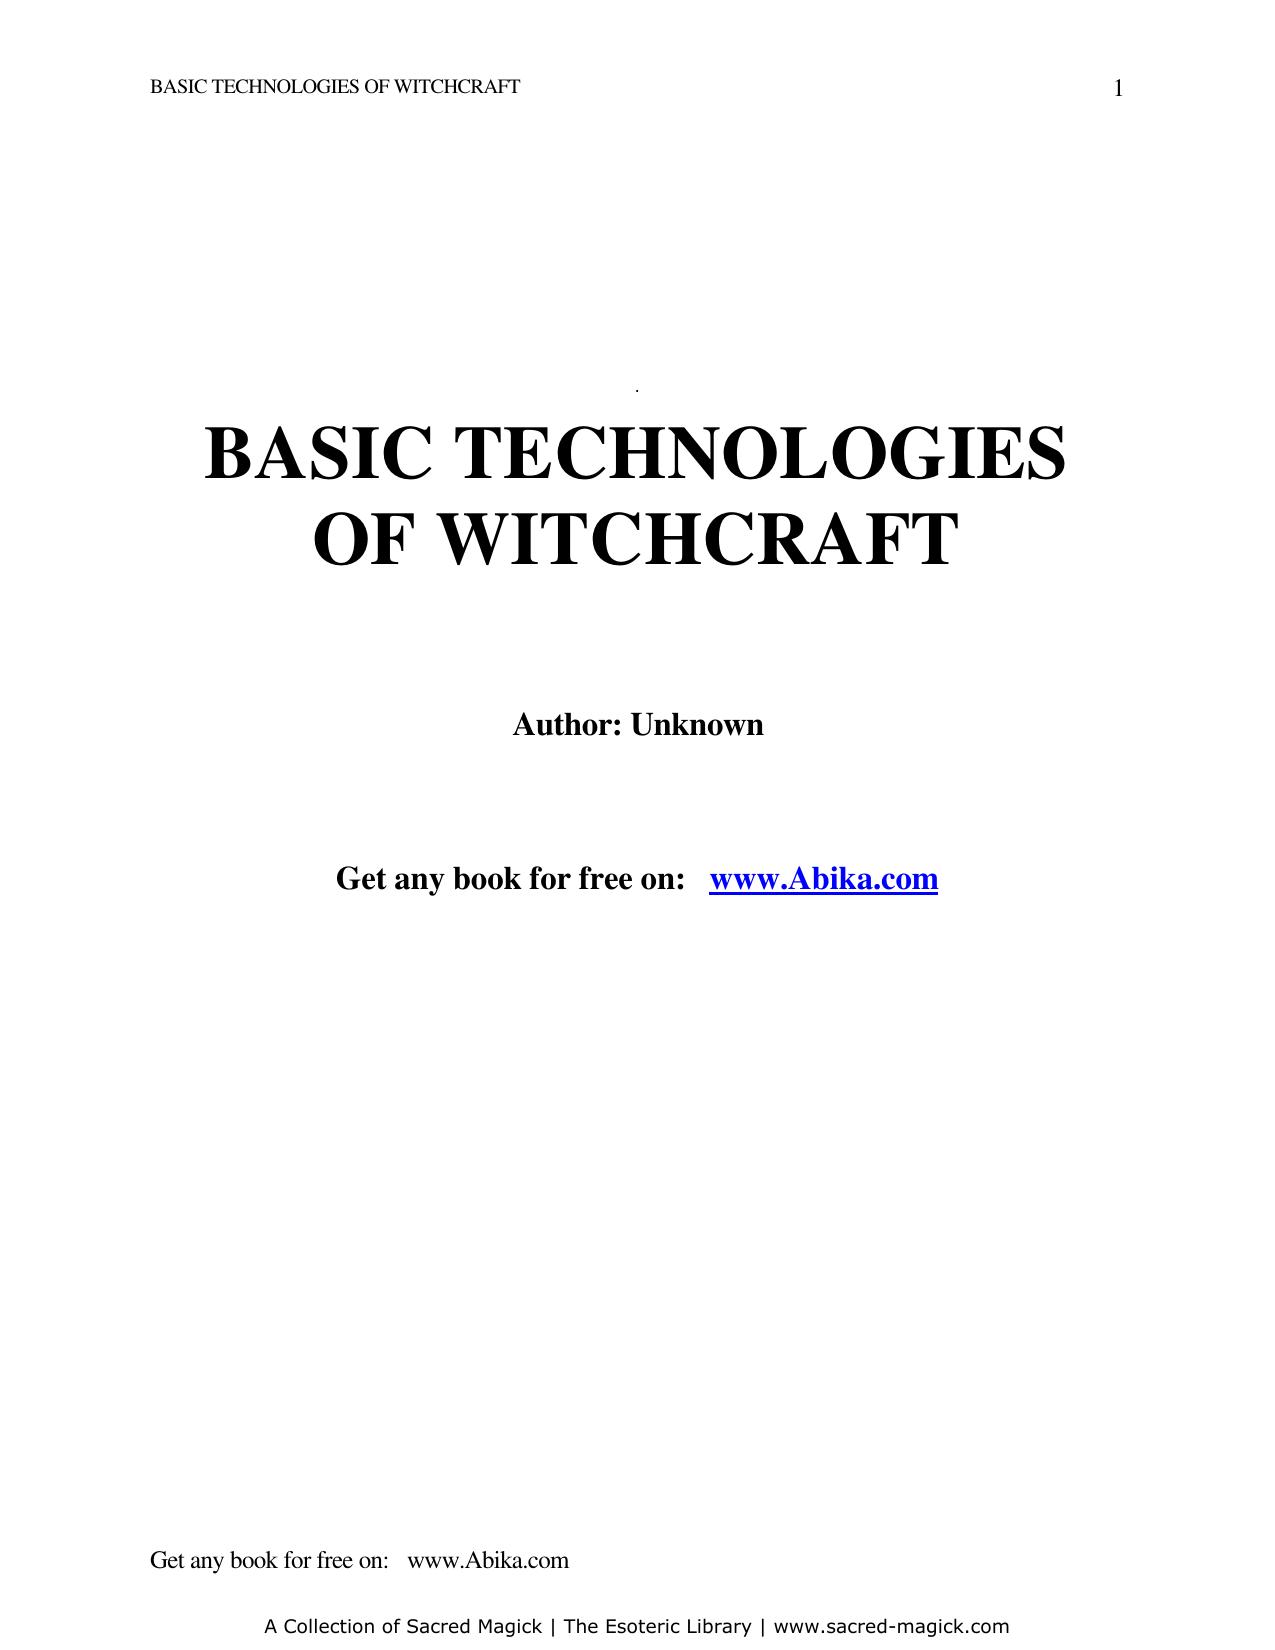 Basic Technologies